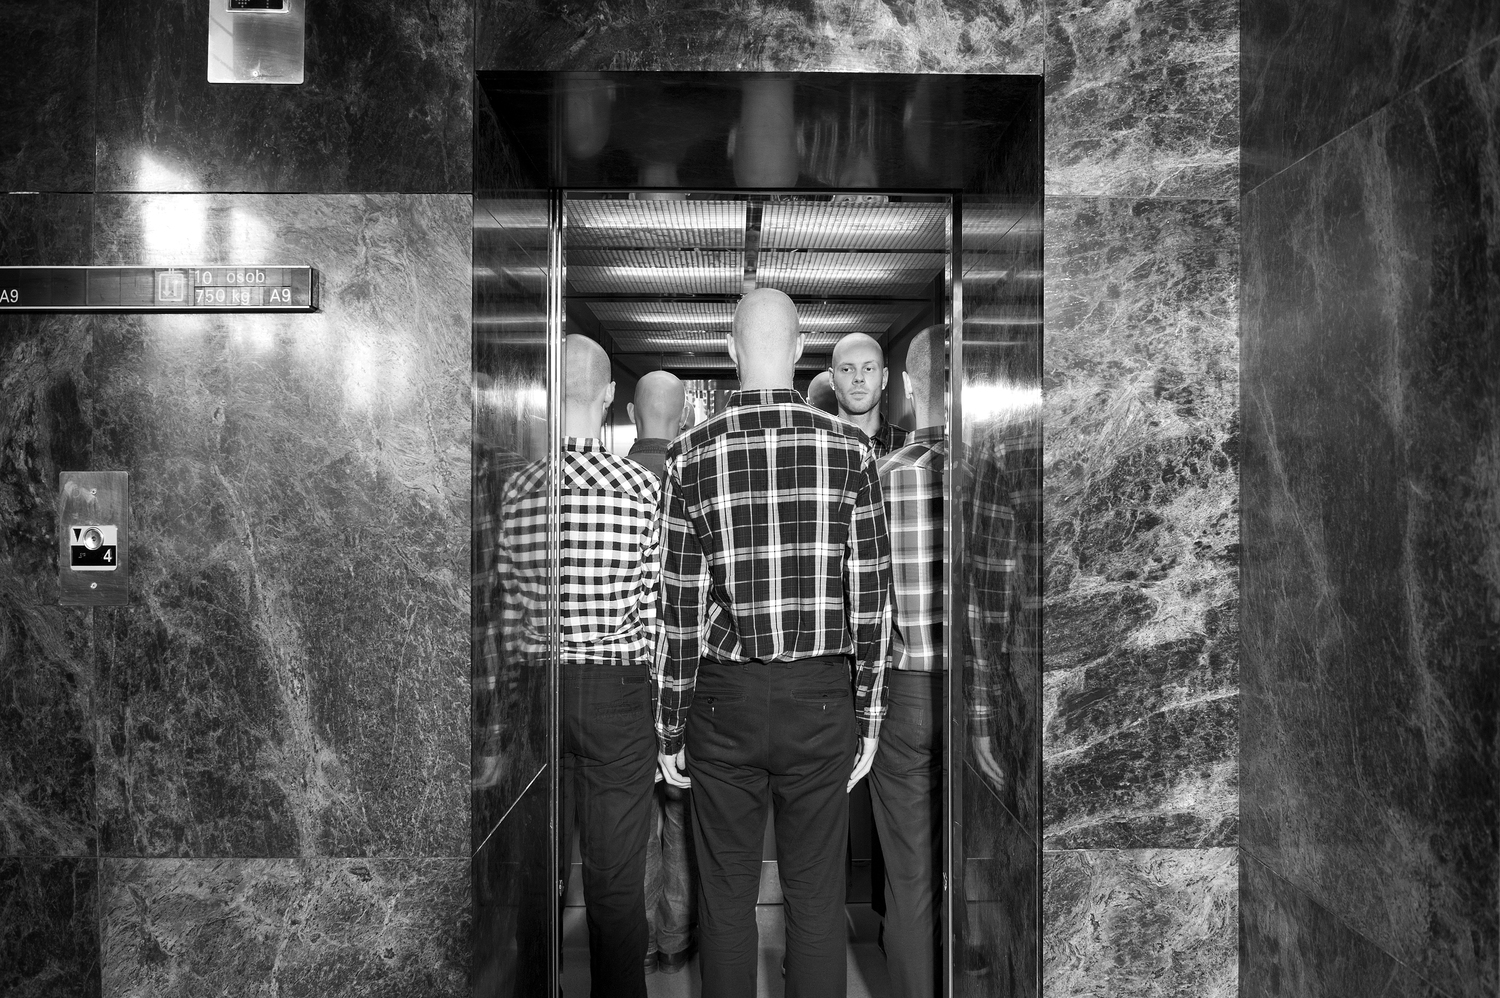 asch conformity experiment elevator